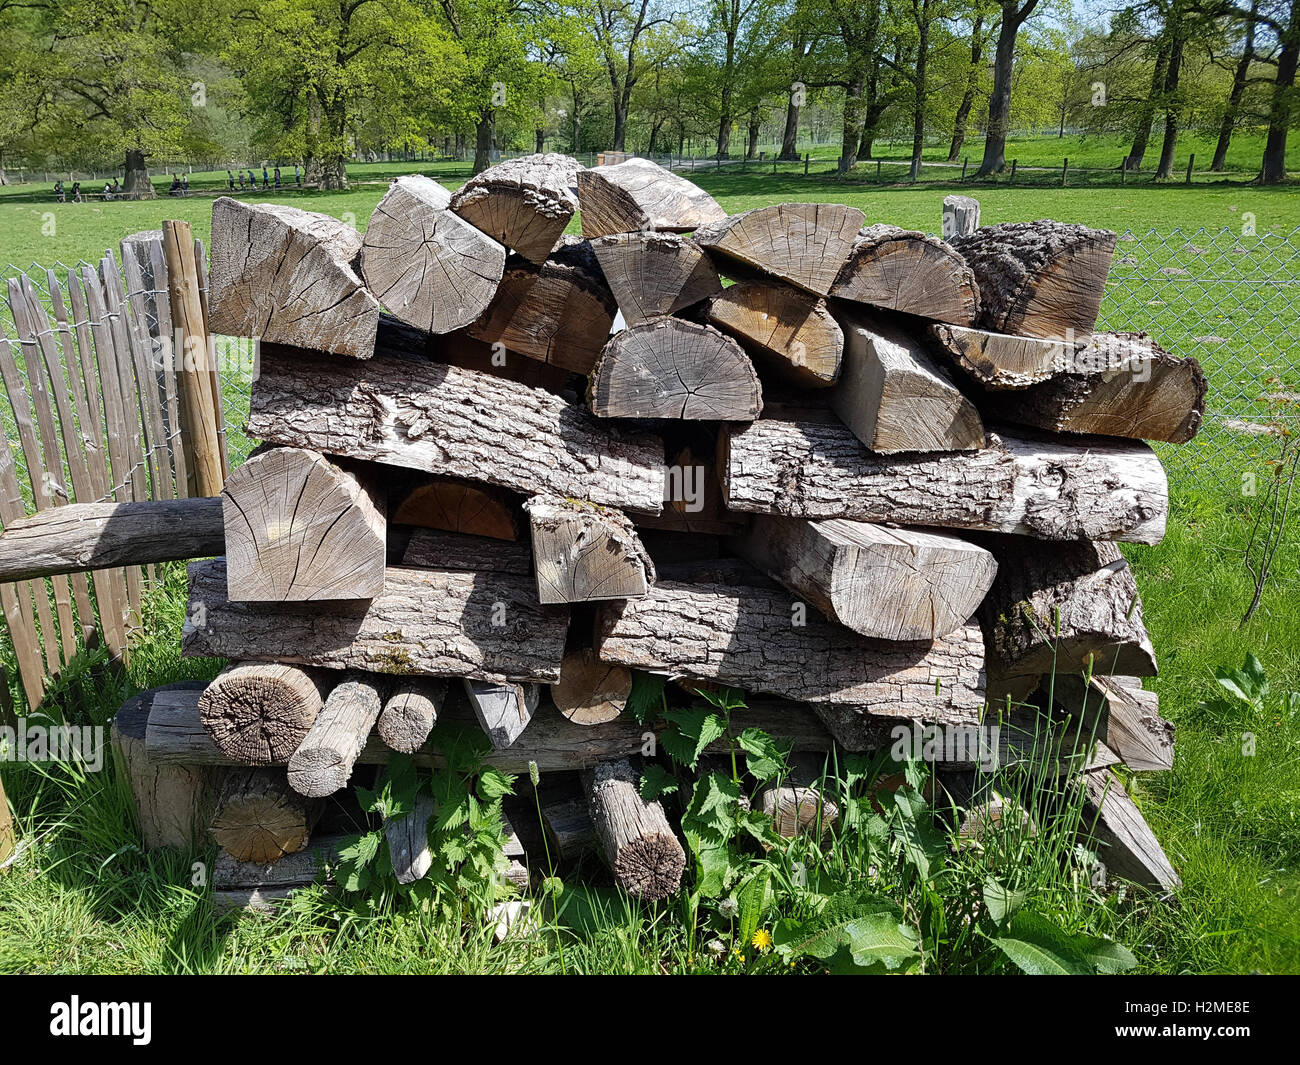 Holzstapel, Brennholz, Holz Stock Photo